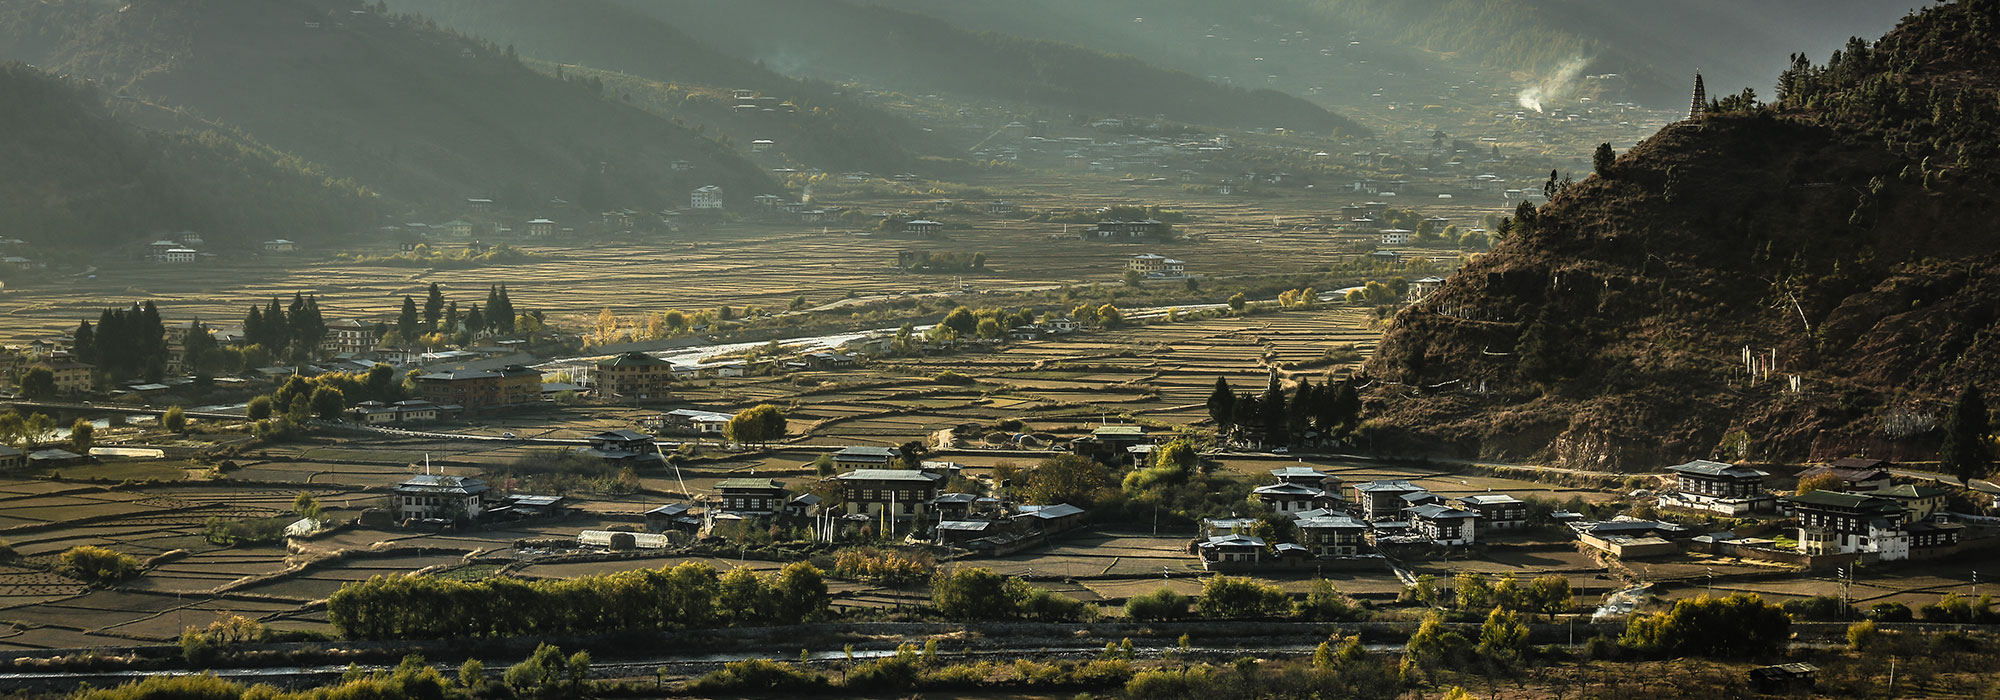 Bhutan at a Glance